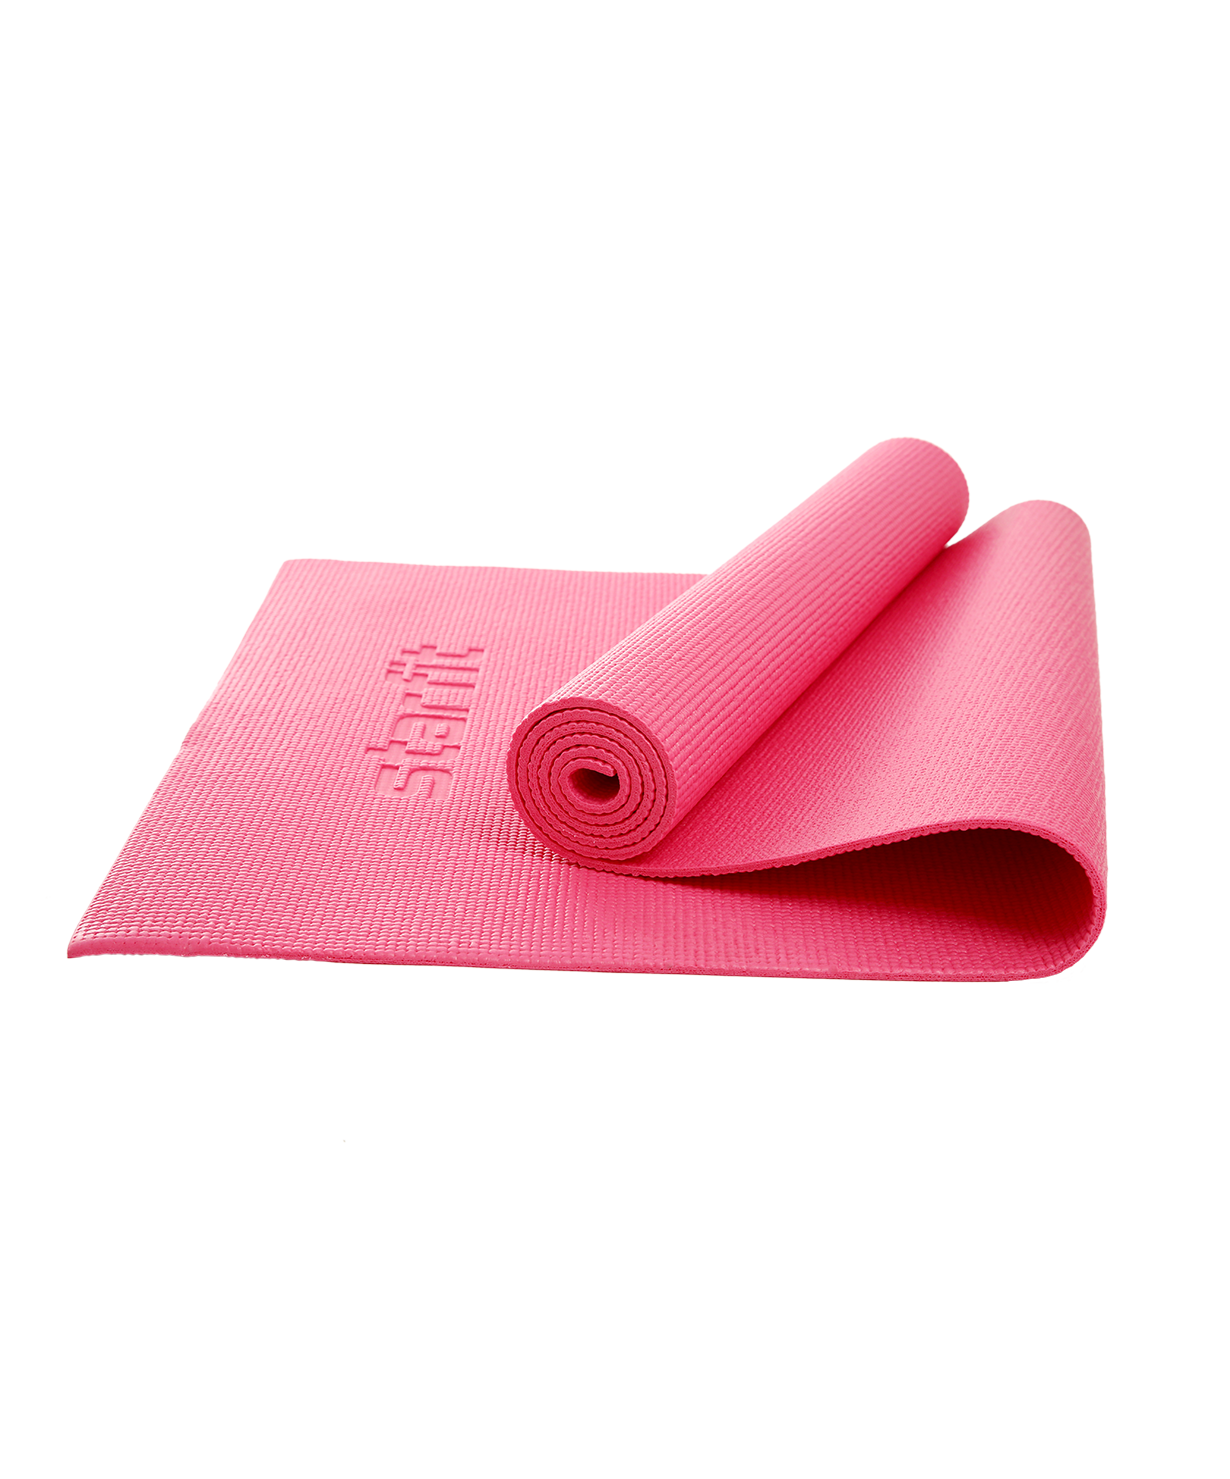 фото Коврик для йоги и фитнеса starfit core fm-101 173x61, pvc, розовый, 0,6 см